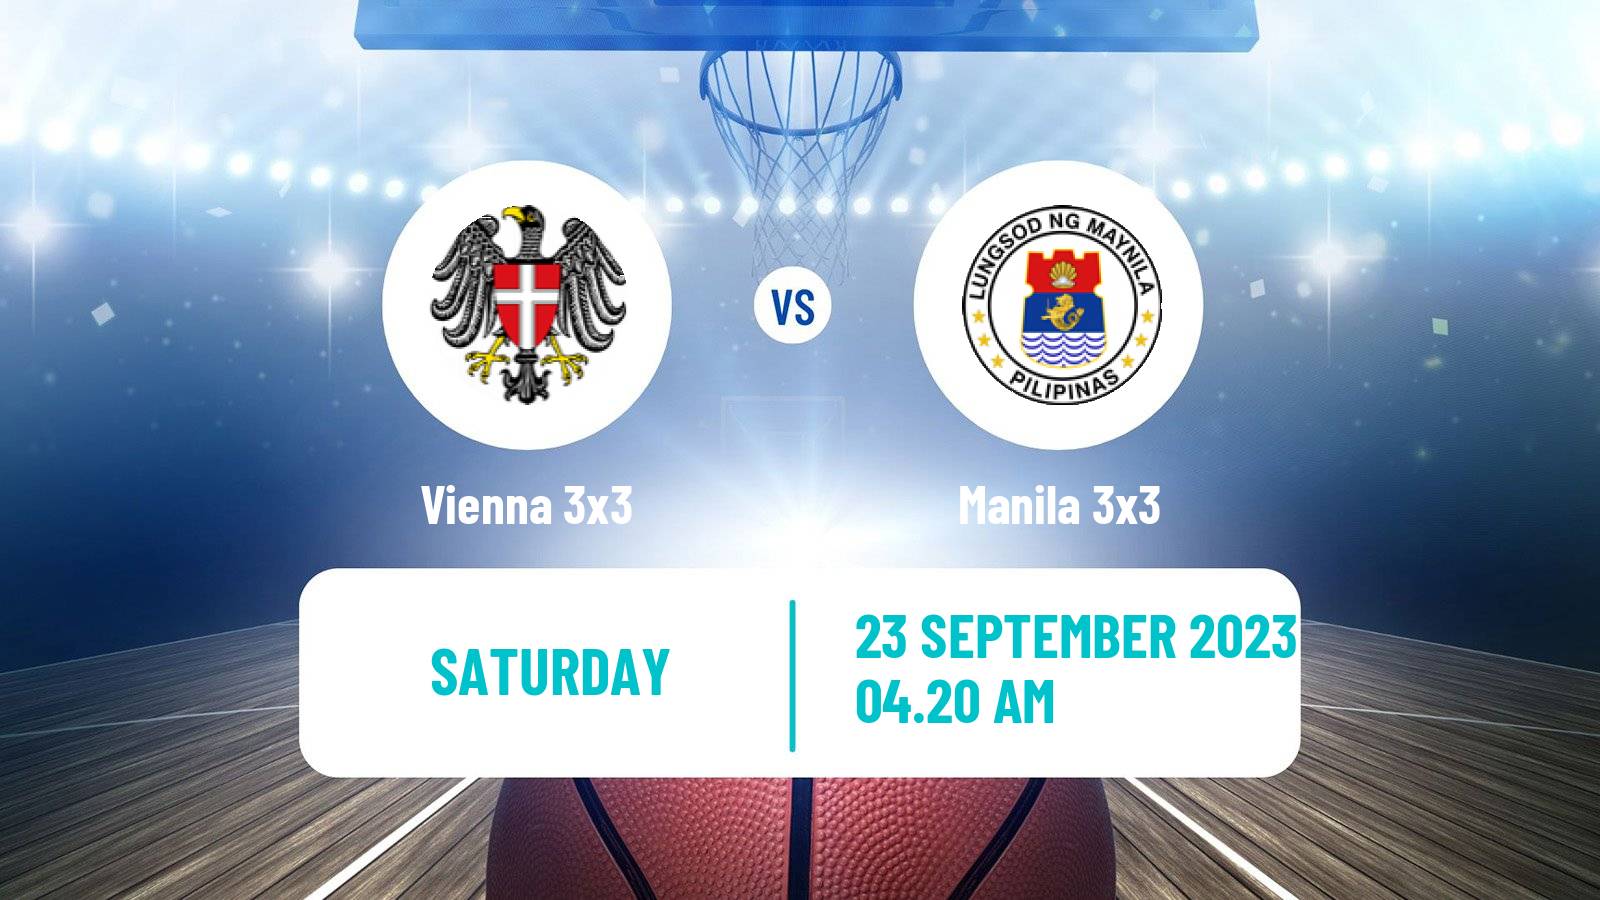 Basketball World Tour Сebu 3x3 Vienna 3x3 - Manila 3x3